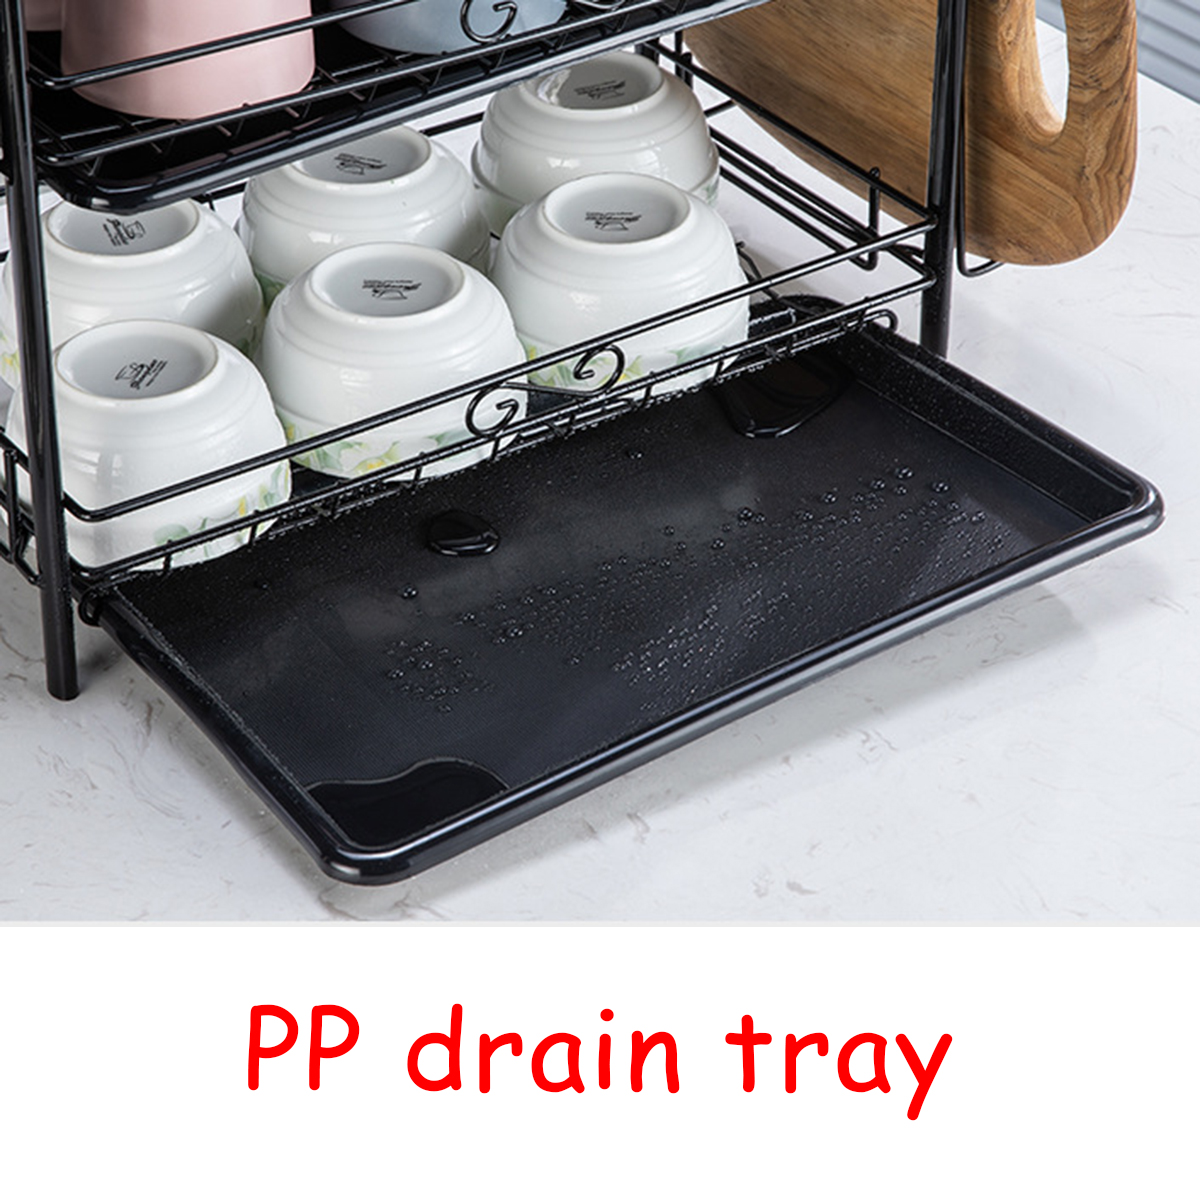 2/3 Tiers Dish Drainer Holder Metal Drying Rack Basket Bowl Dish Draining Shelf Dryer Tray Holder Kitchen Sink Organizer Home